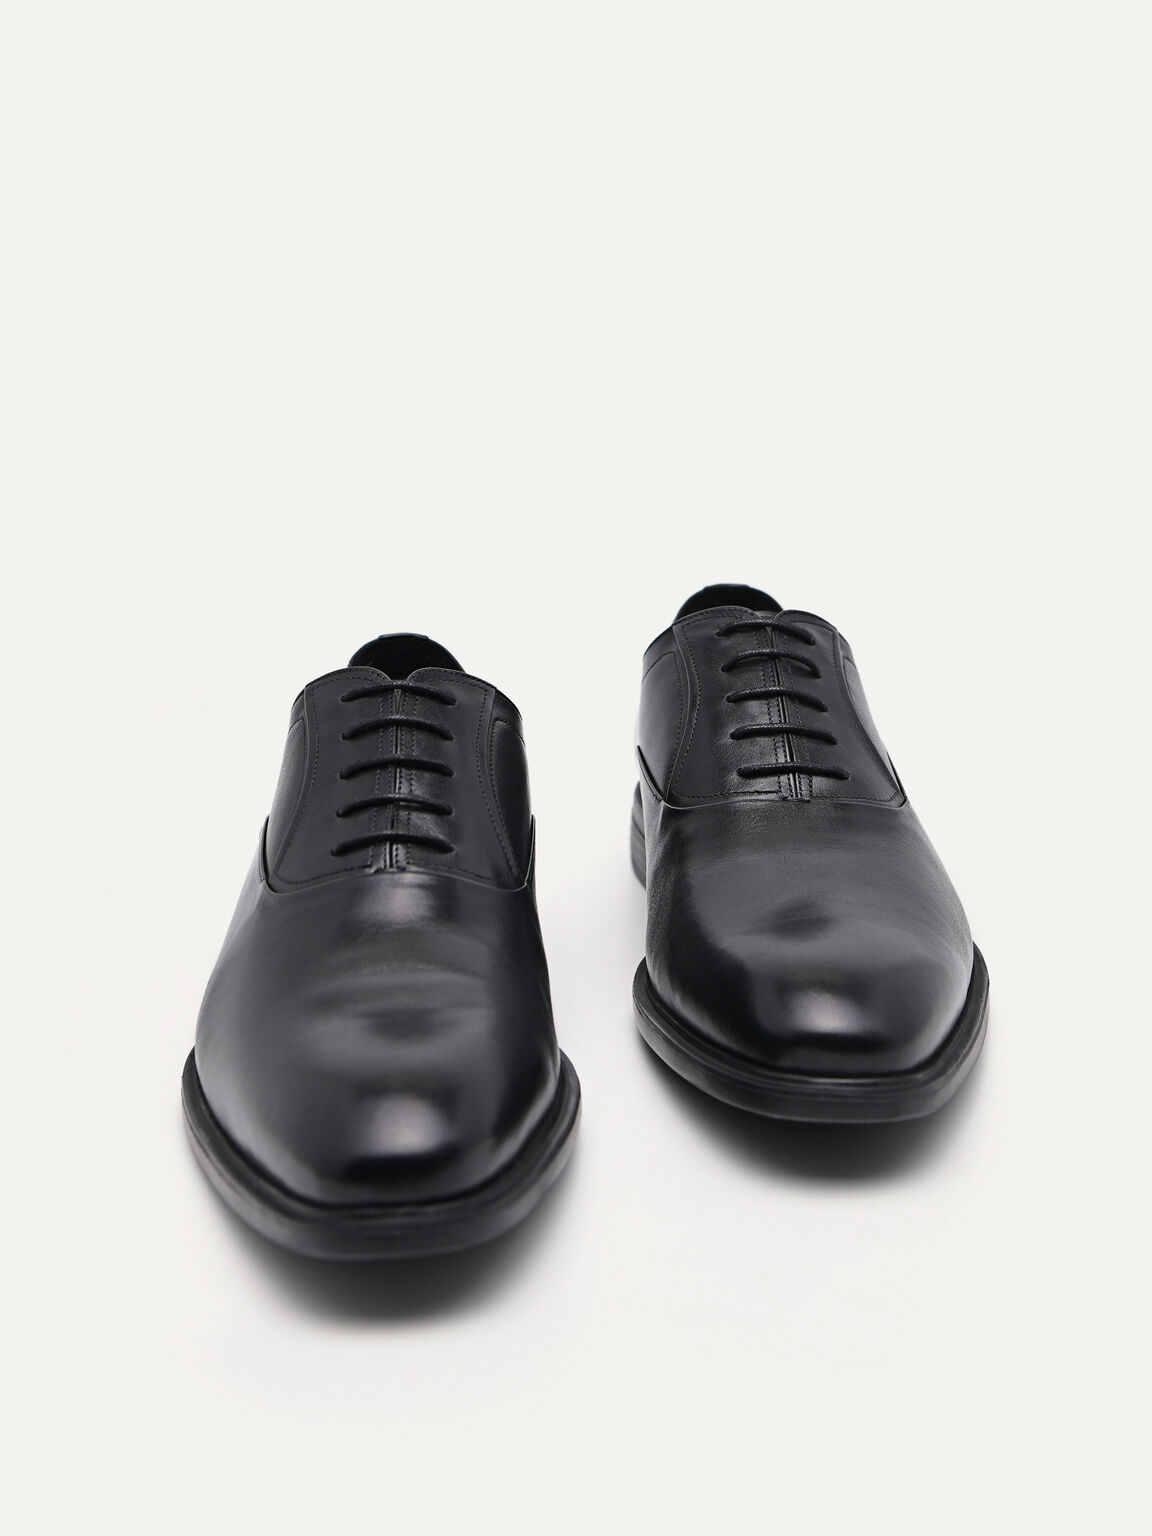 Altitude Lightweight Leather Oxfords, Black